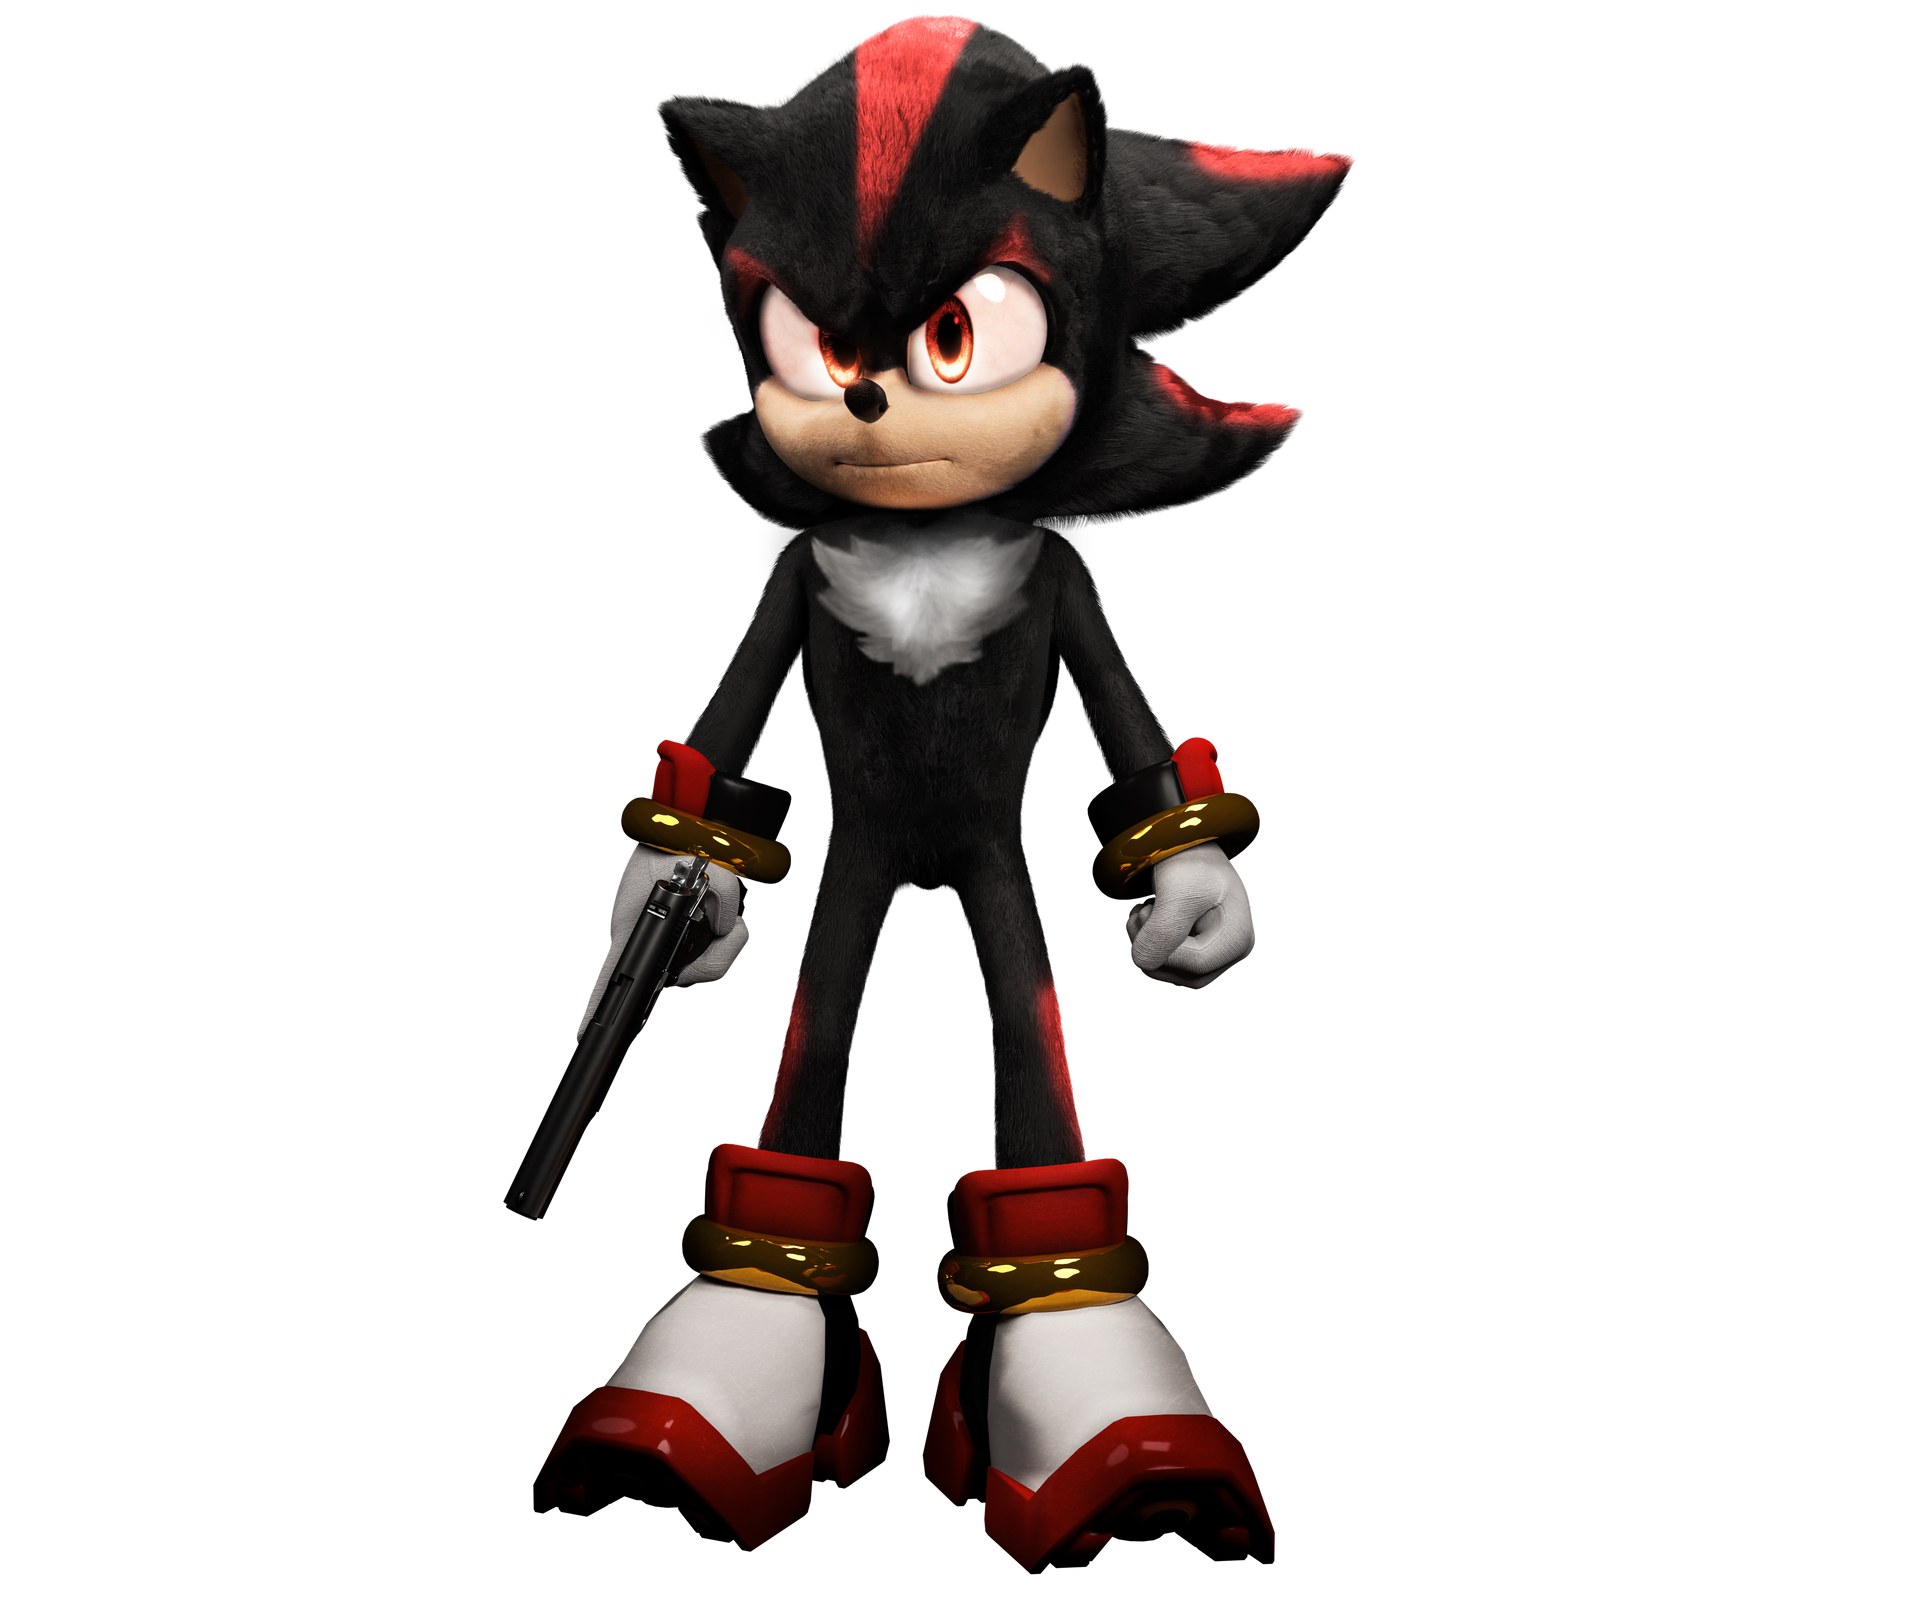 Shadow, Sonic the Hedgehog